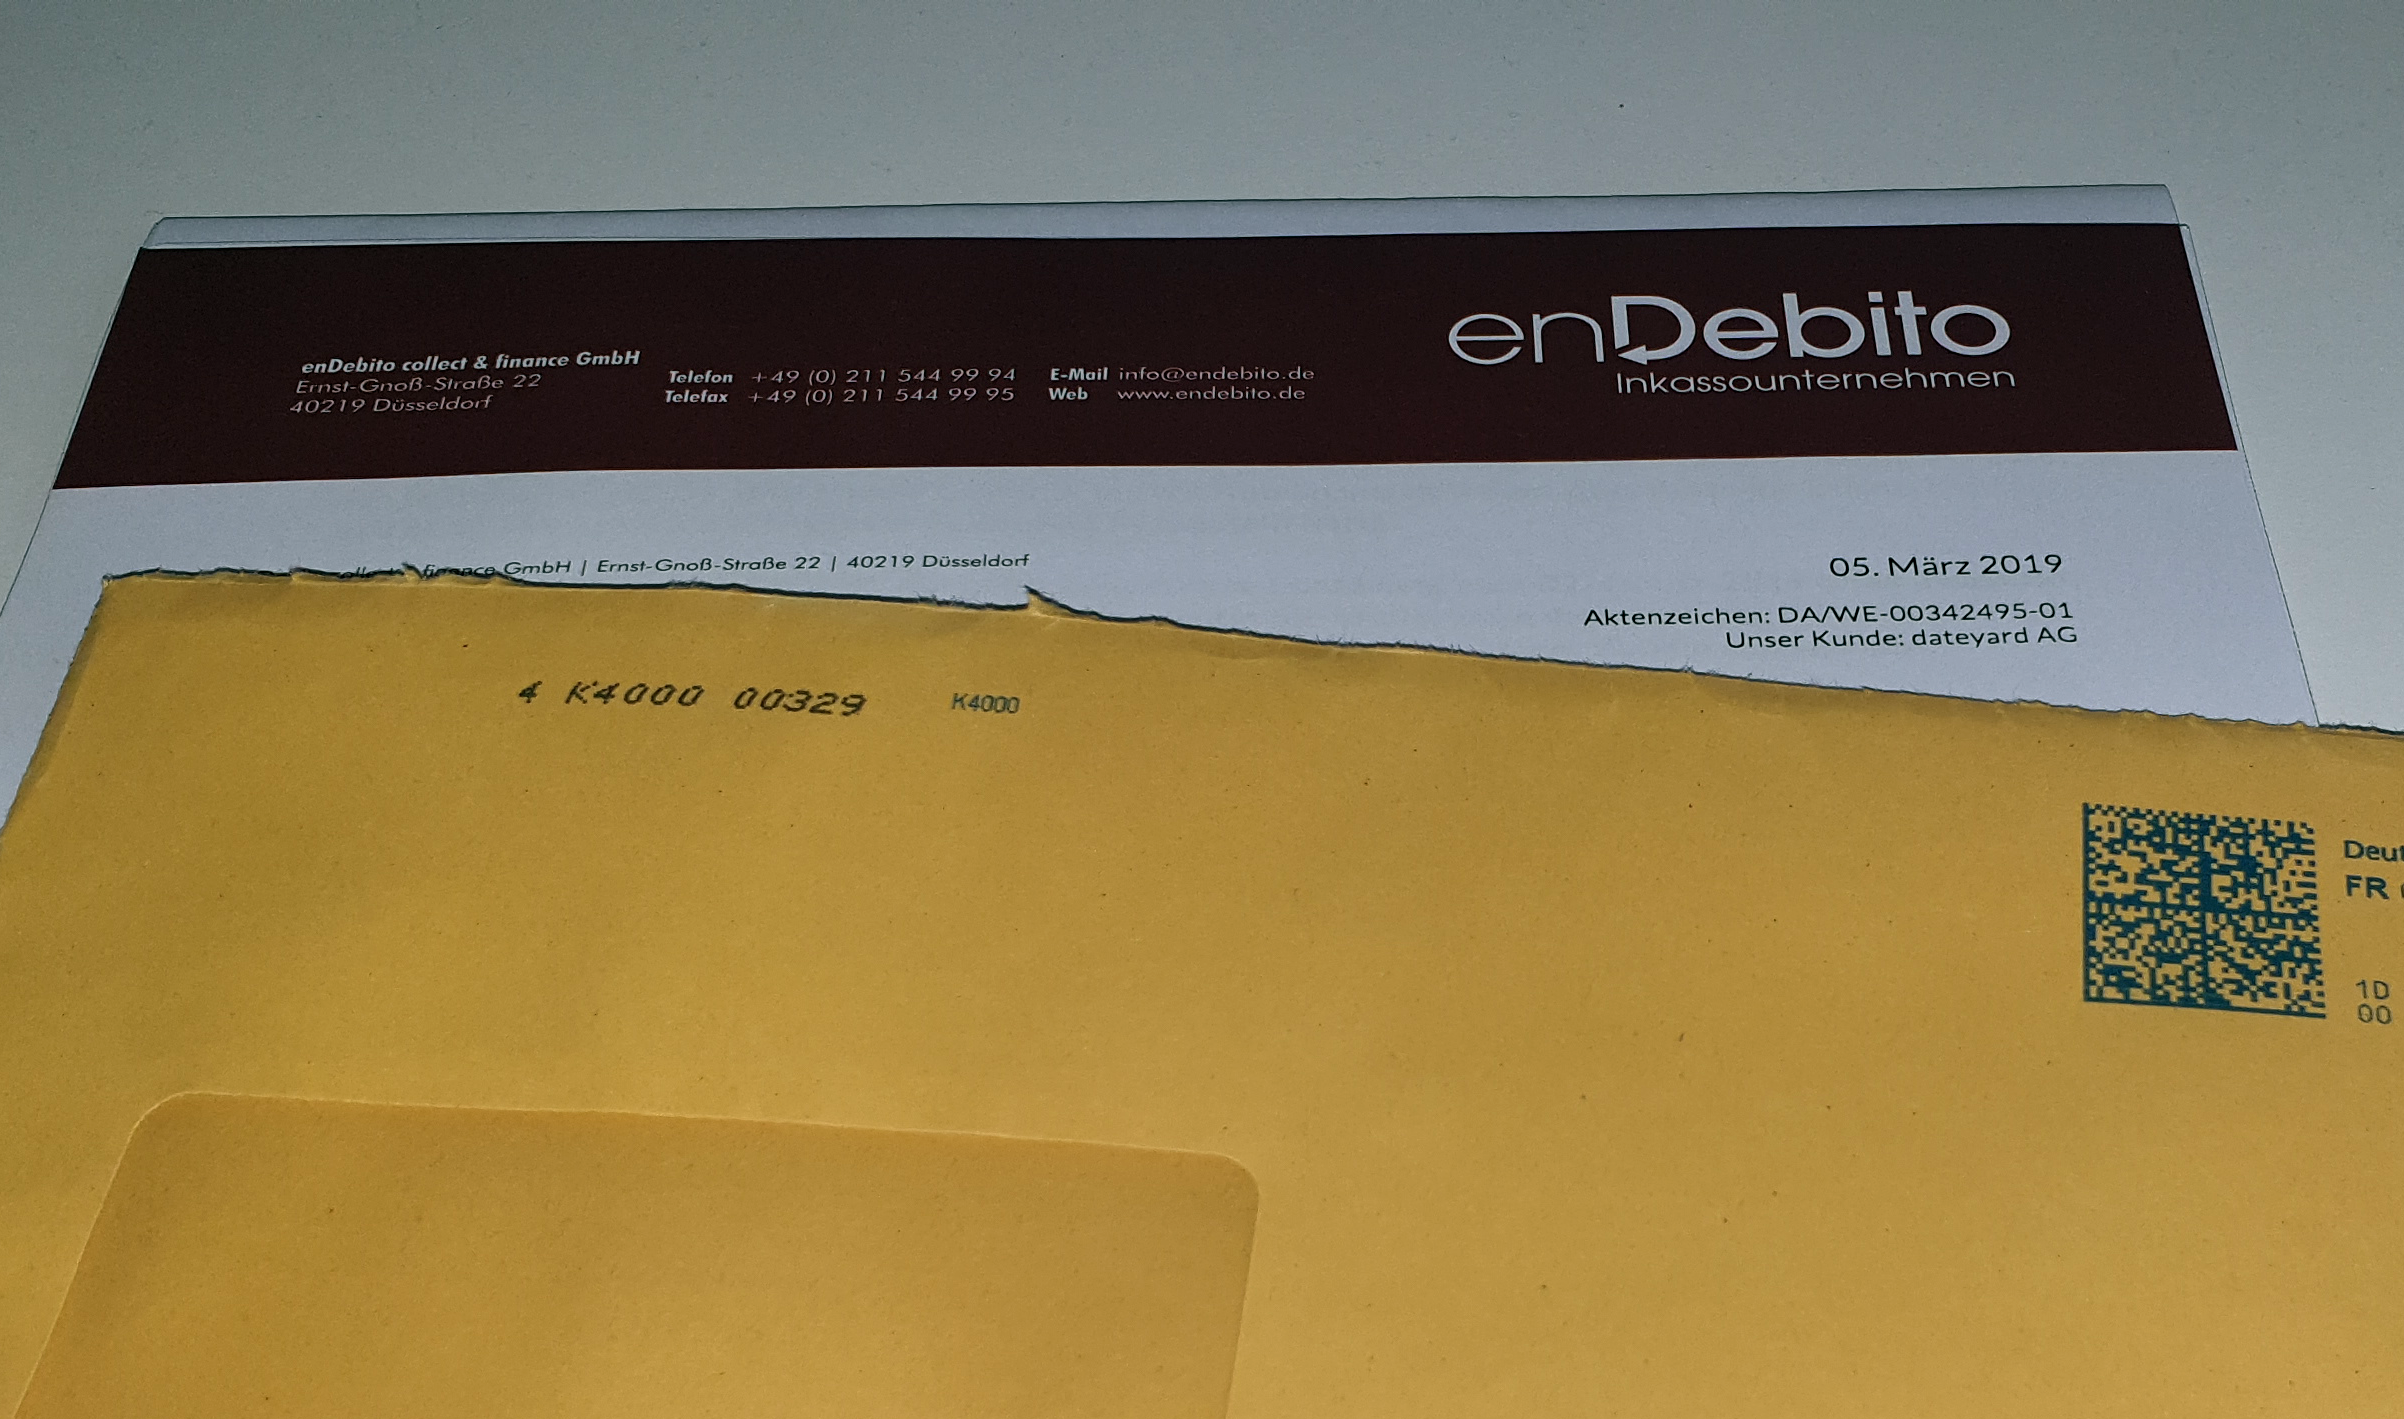 enDebito collect & finance GmbH